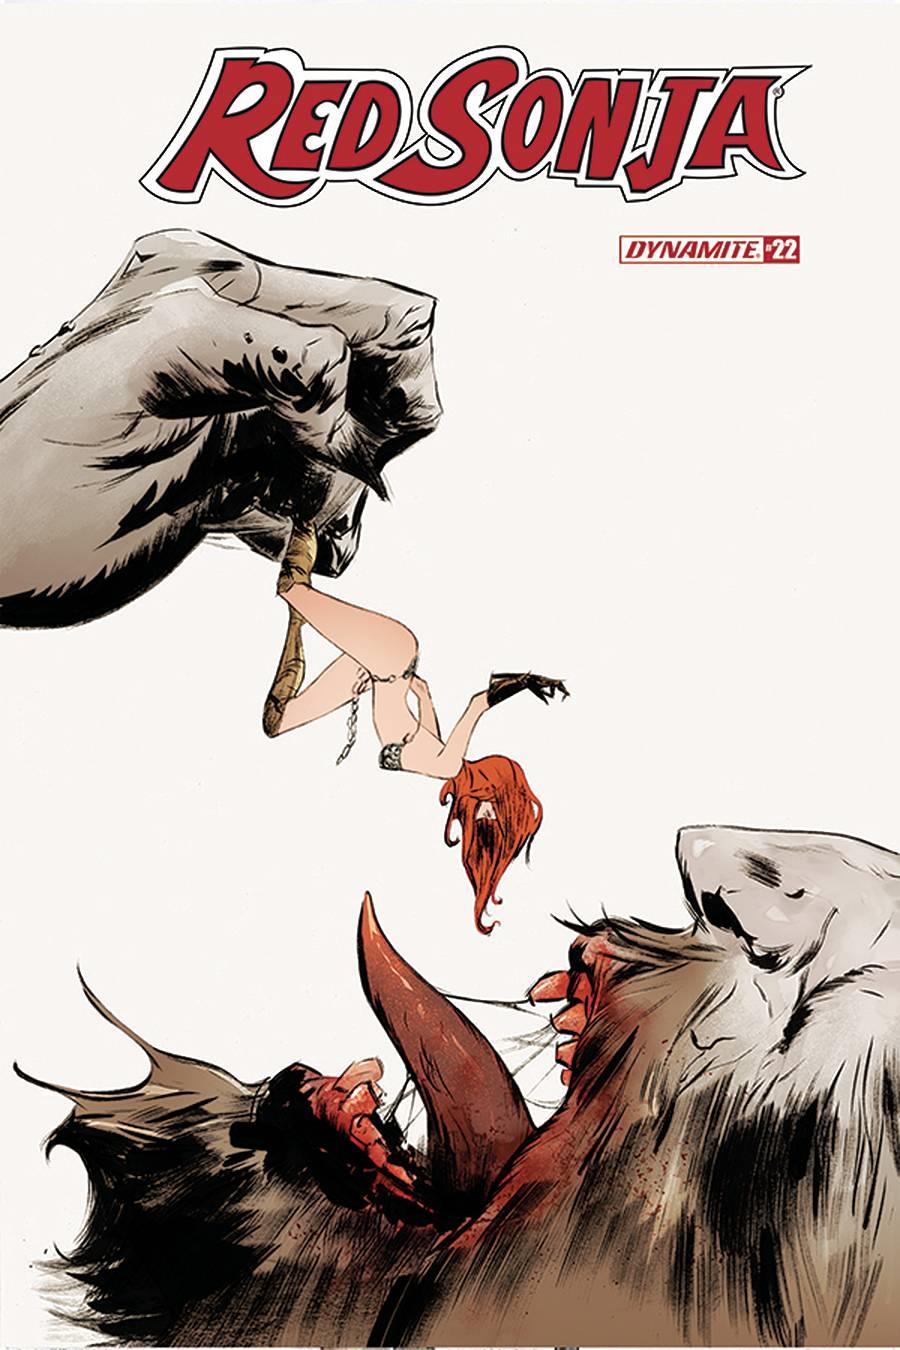 Red Sonja #22 Cvr A Lee (Cvr A Lee) Dynamite Comic Book 2020